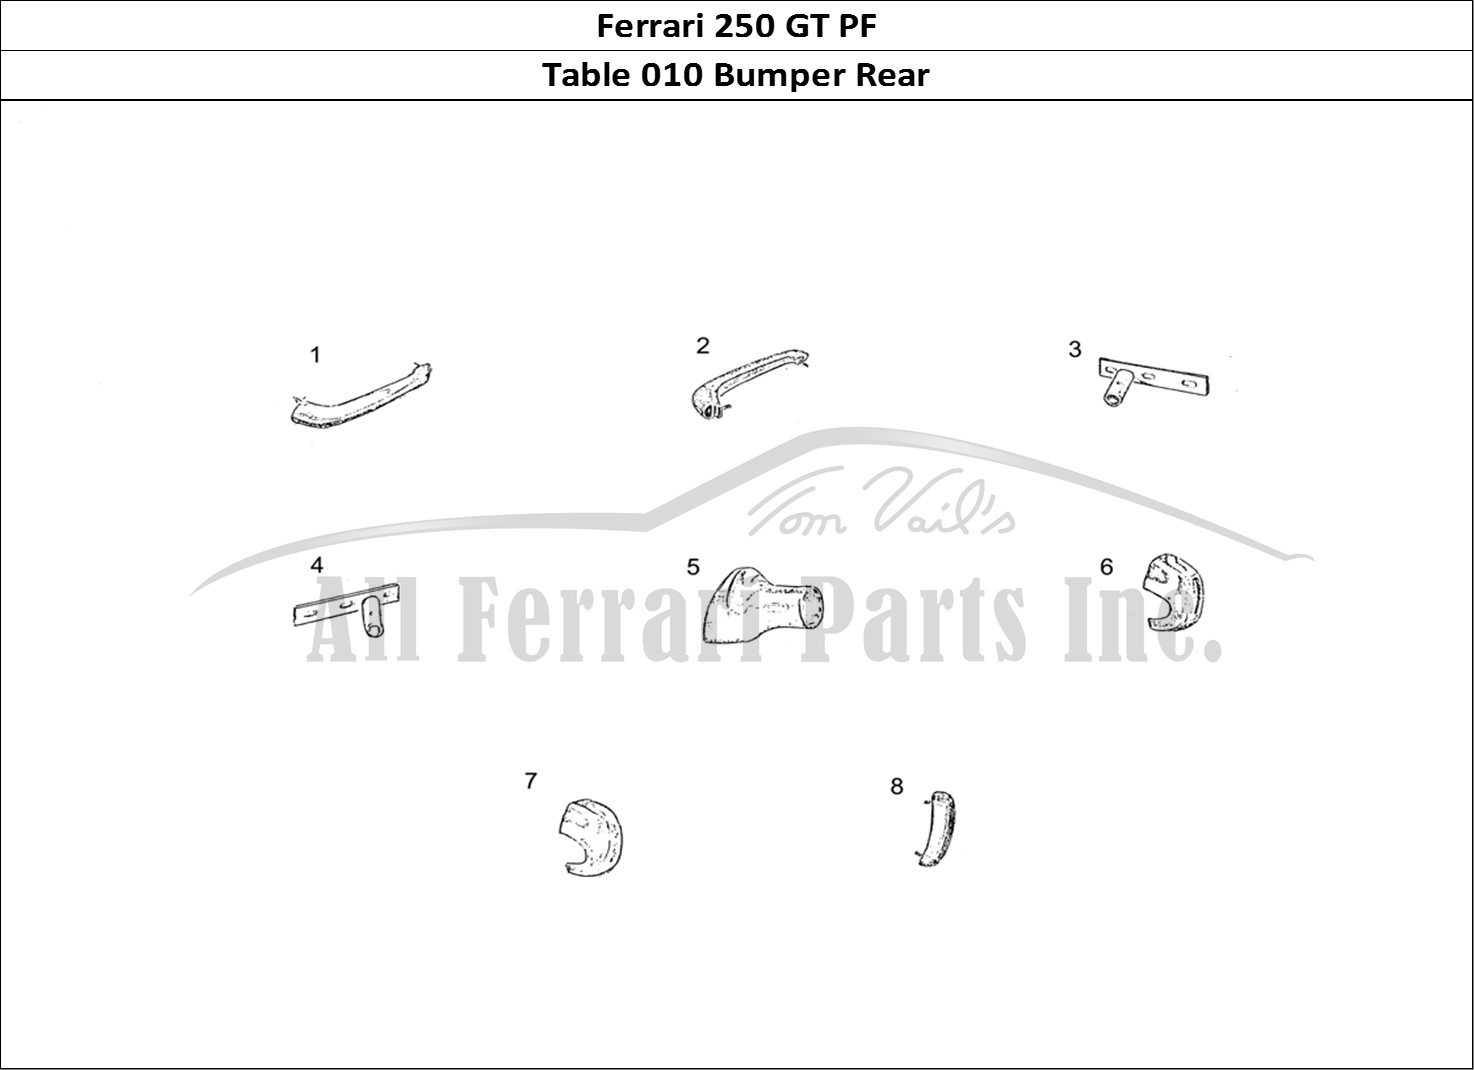 Ferrari Parts Ferrari 250 GT (Coachwork) Page 010 Bumper Rear